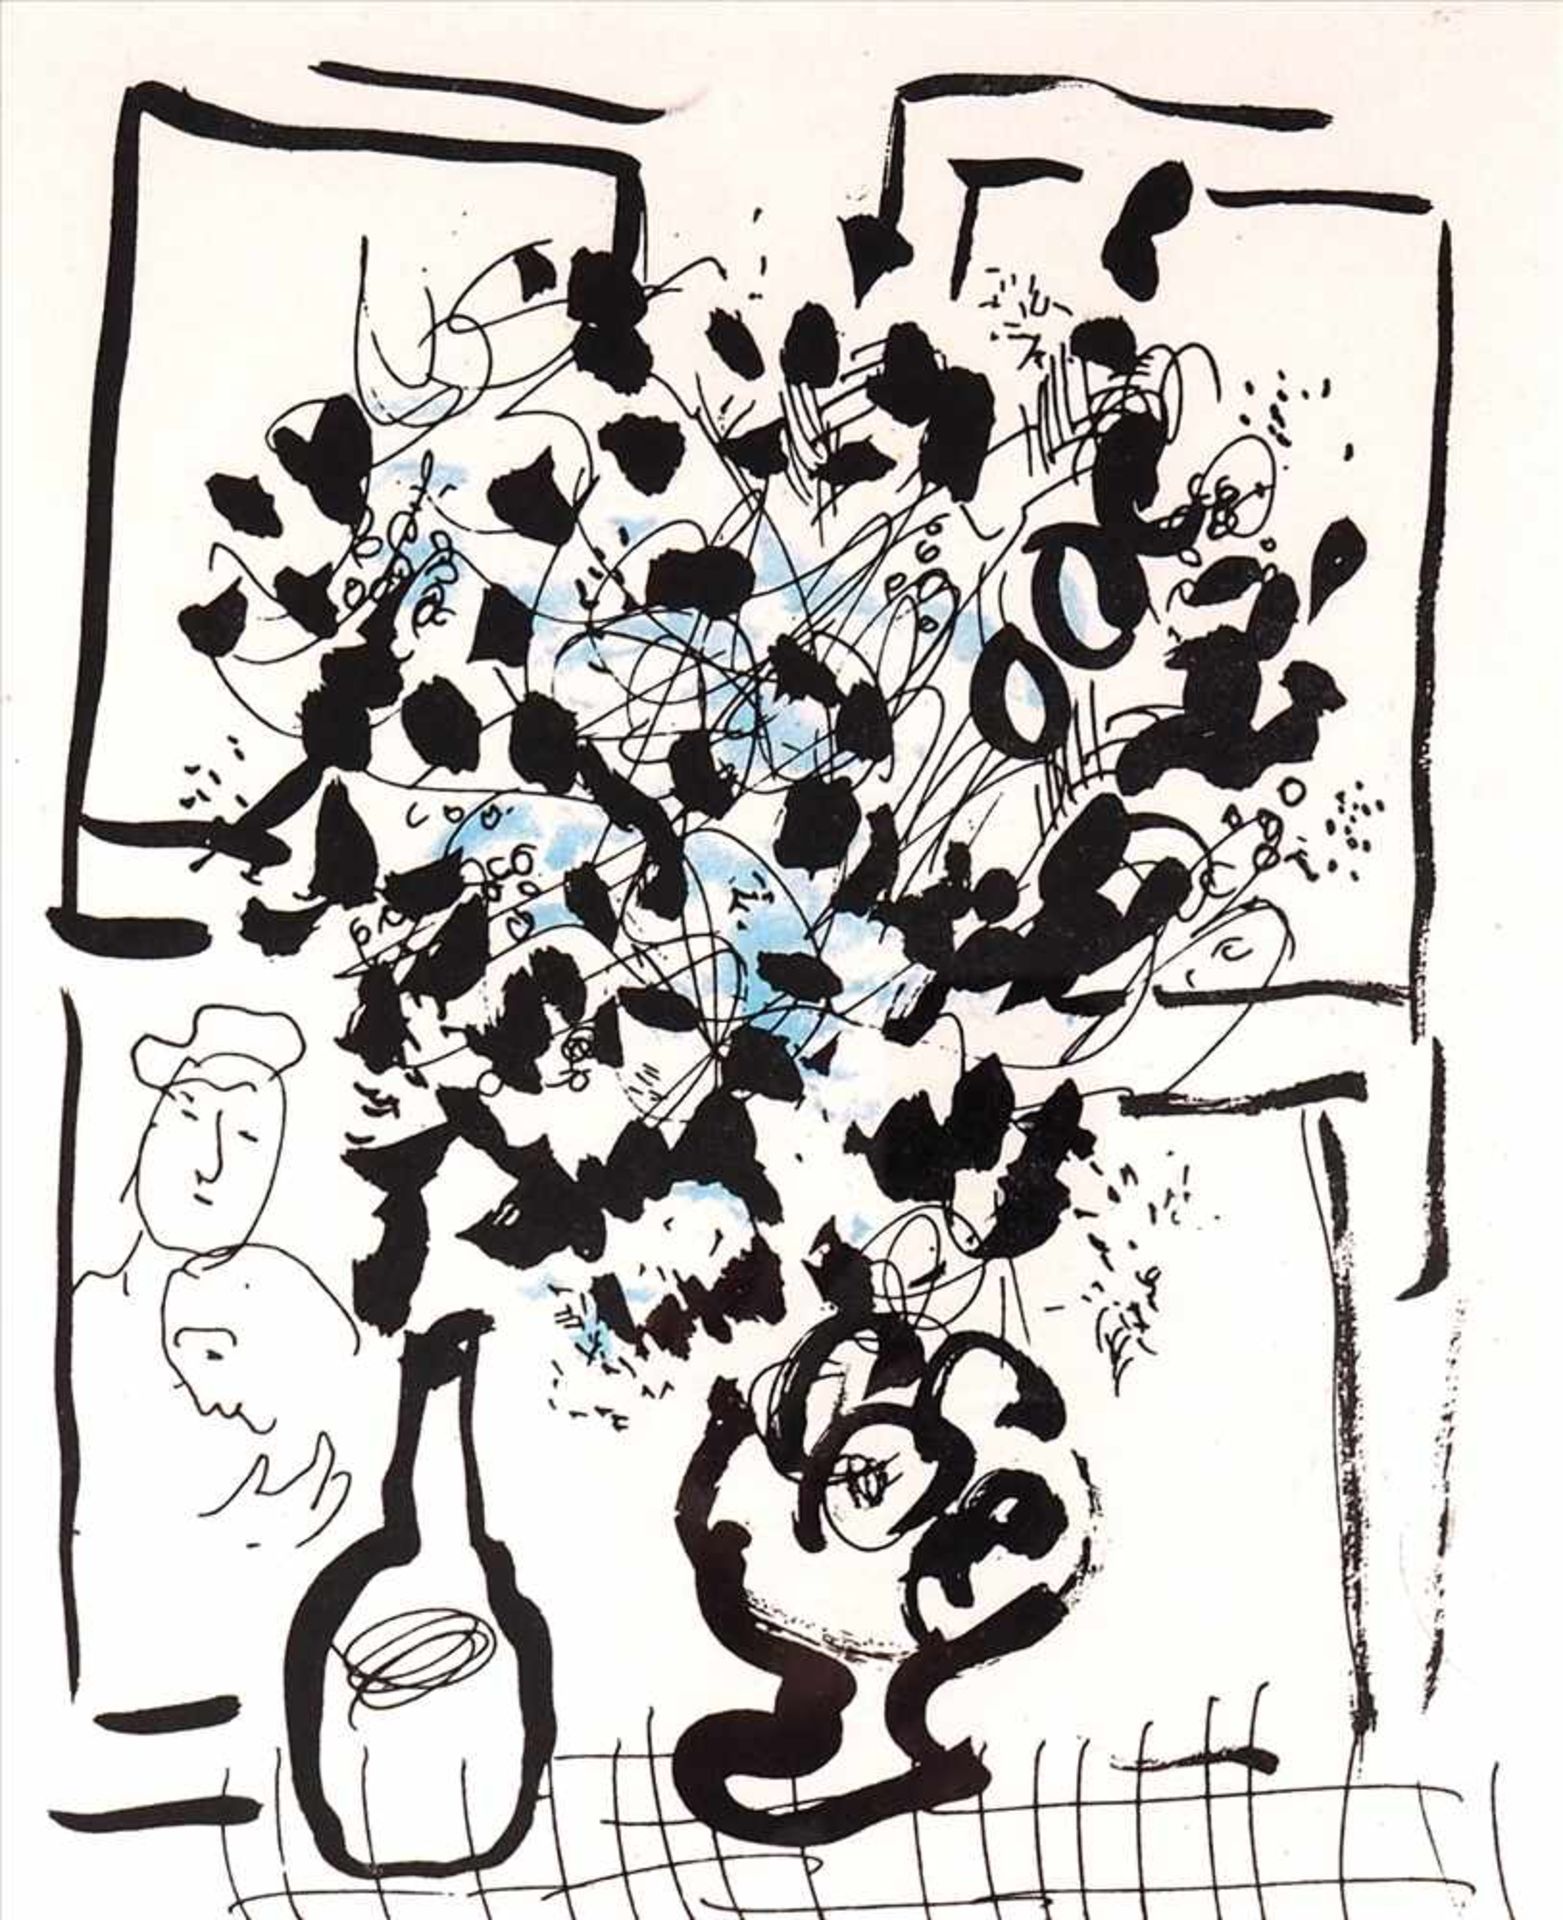 Chagall, Marc1887 Witebsk - 1985 Saint-Paul-de-Vence, nach. Farblithographie. Nach Nature morte